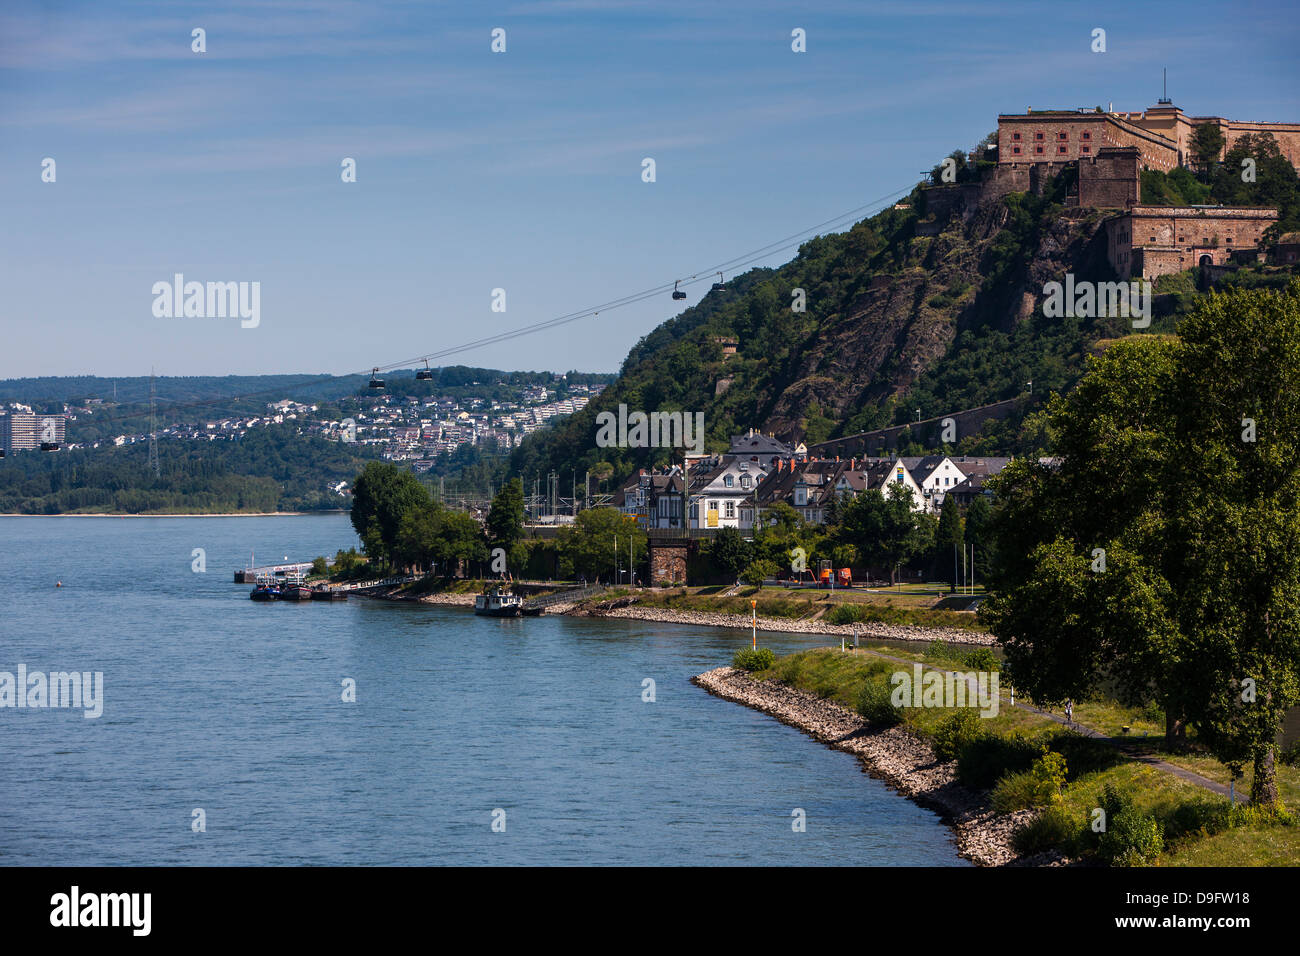 Forteresse de Coblence, vallée du Rhin, Koblenz, Rhénanie-Palatinat, Allemagne Banque D'Images